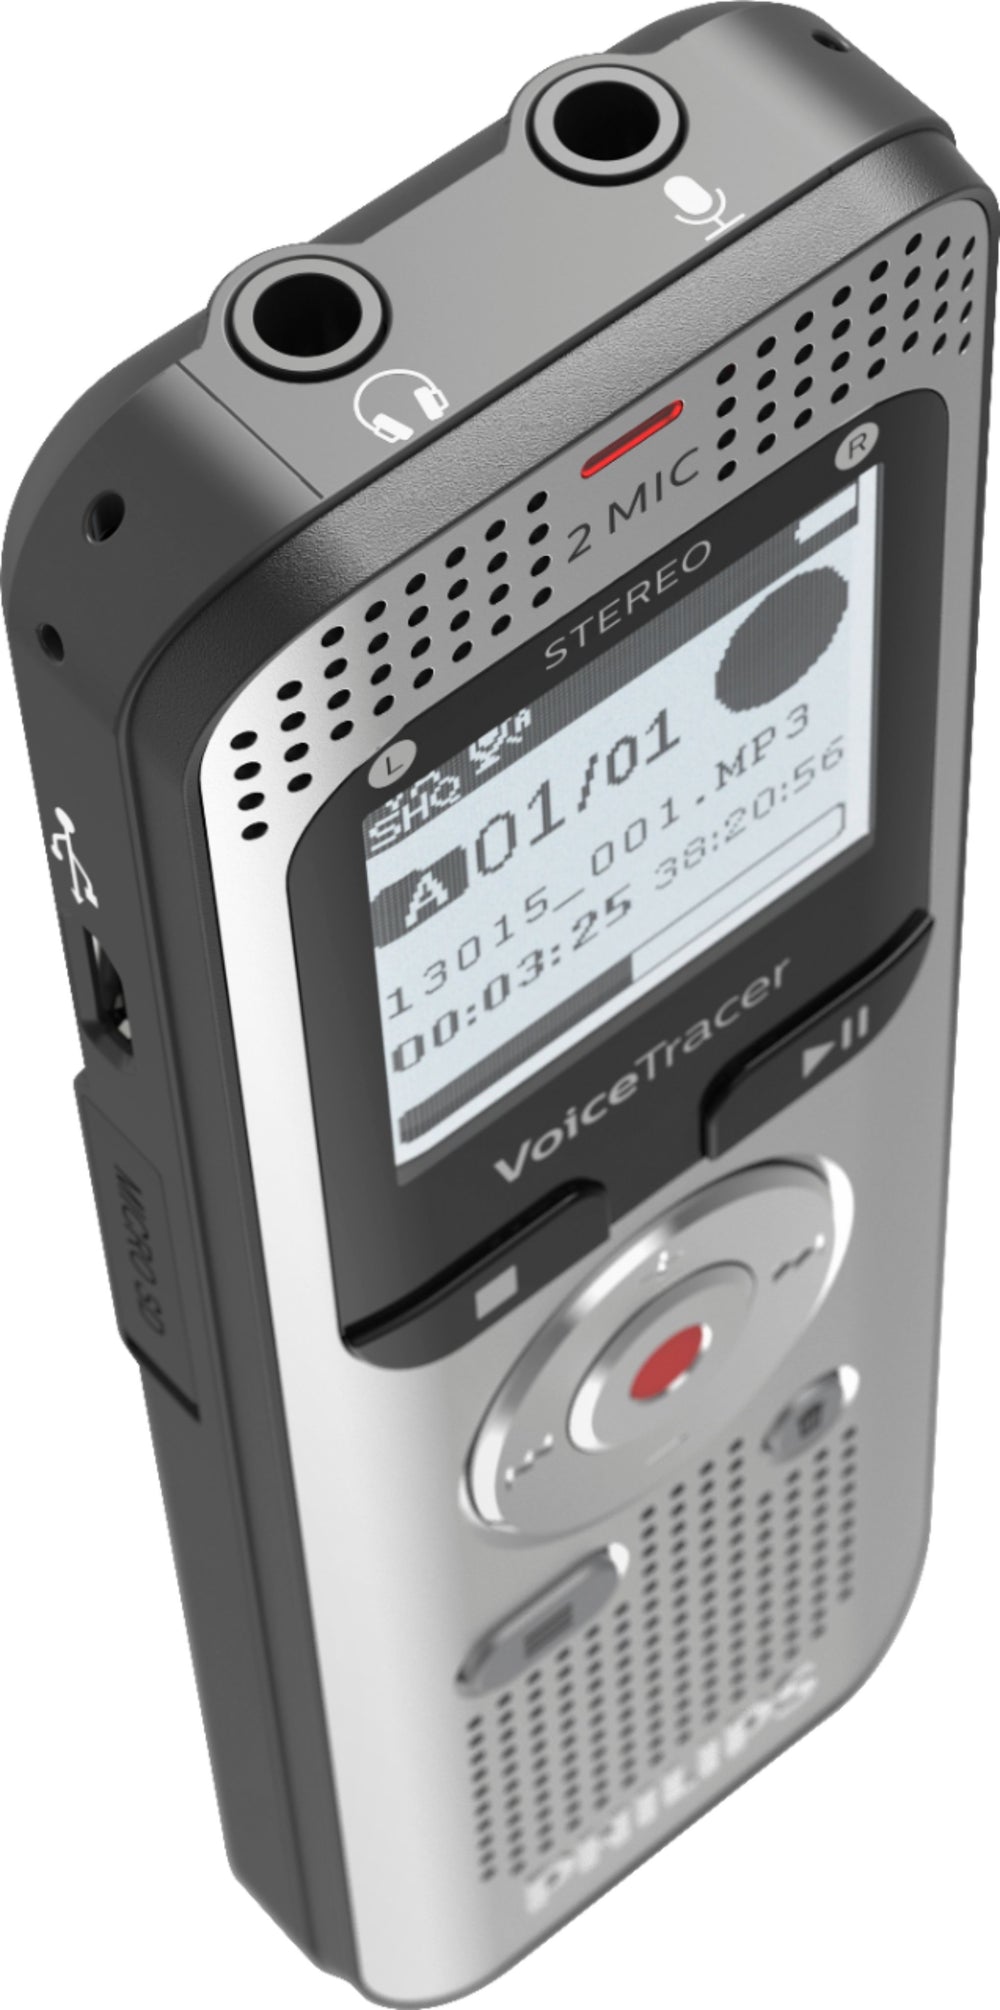 Philips - VoiceTracer Digital Audio Recorder - Light Silver & Black_1